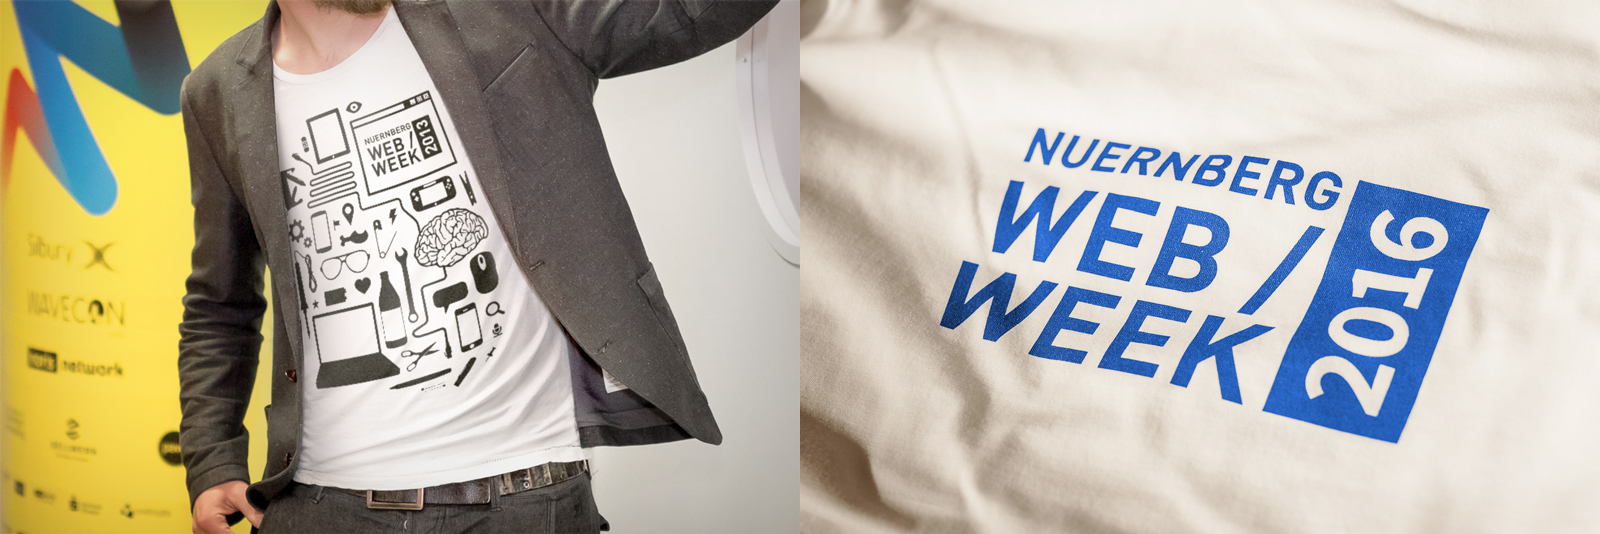 Nürnberg Web Week T-Shirt